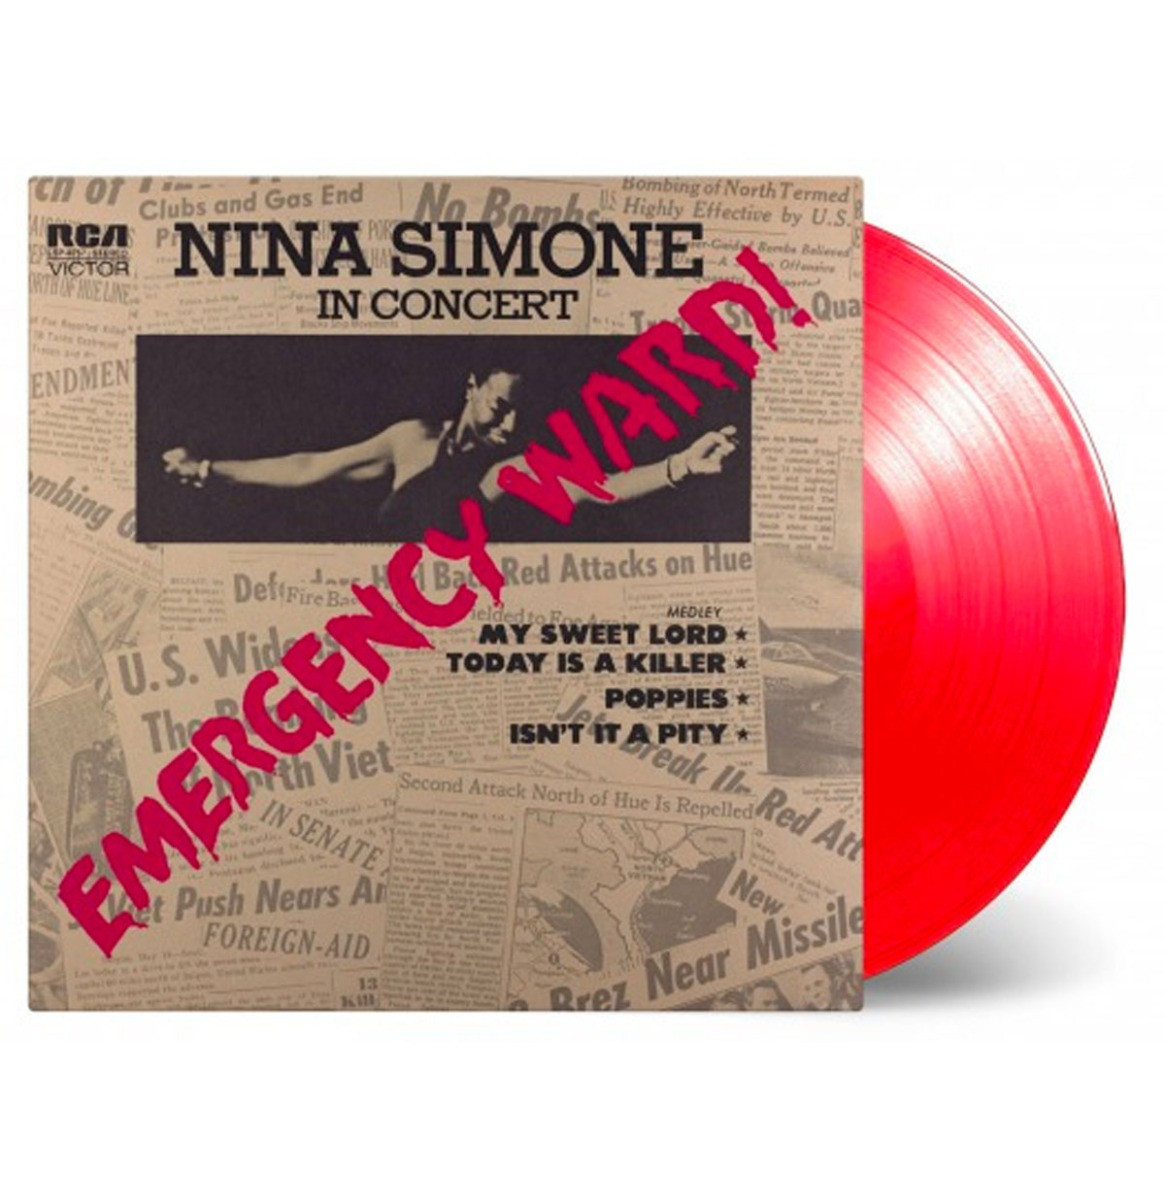 Nina Simone - Emergency Ward Live Transparant Red Vinyl